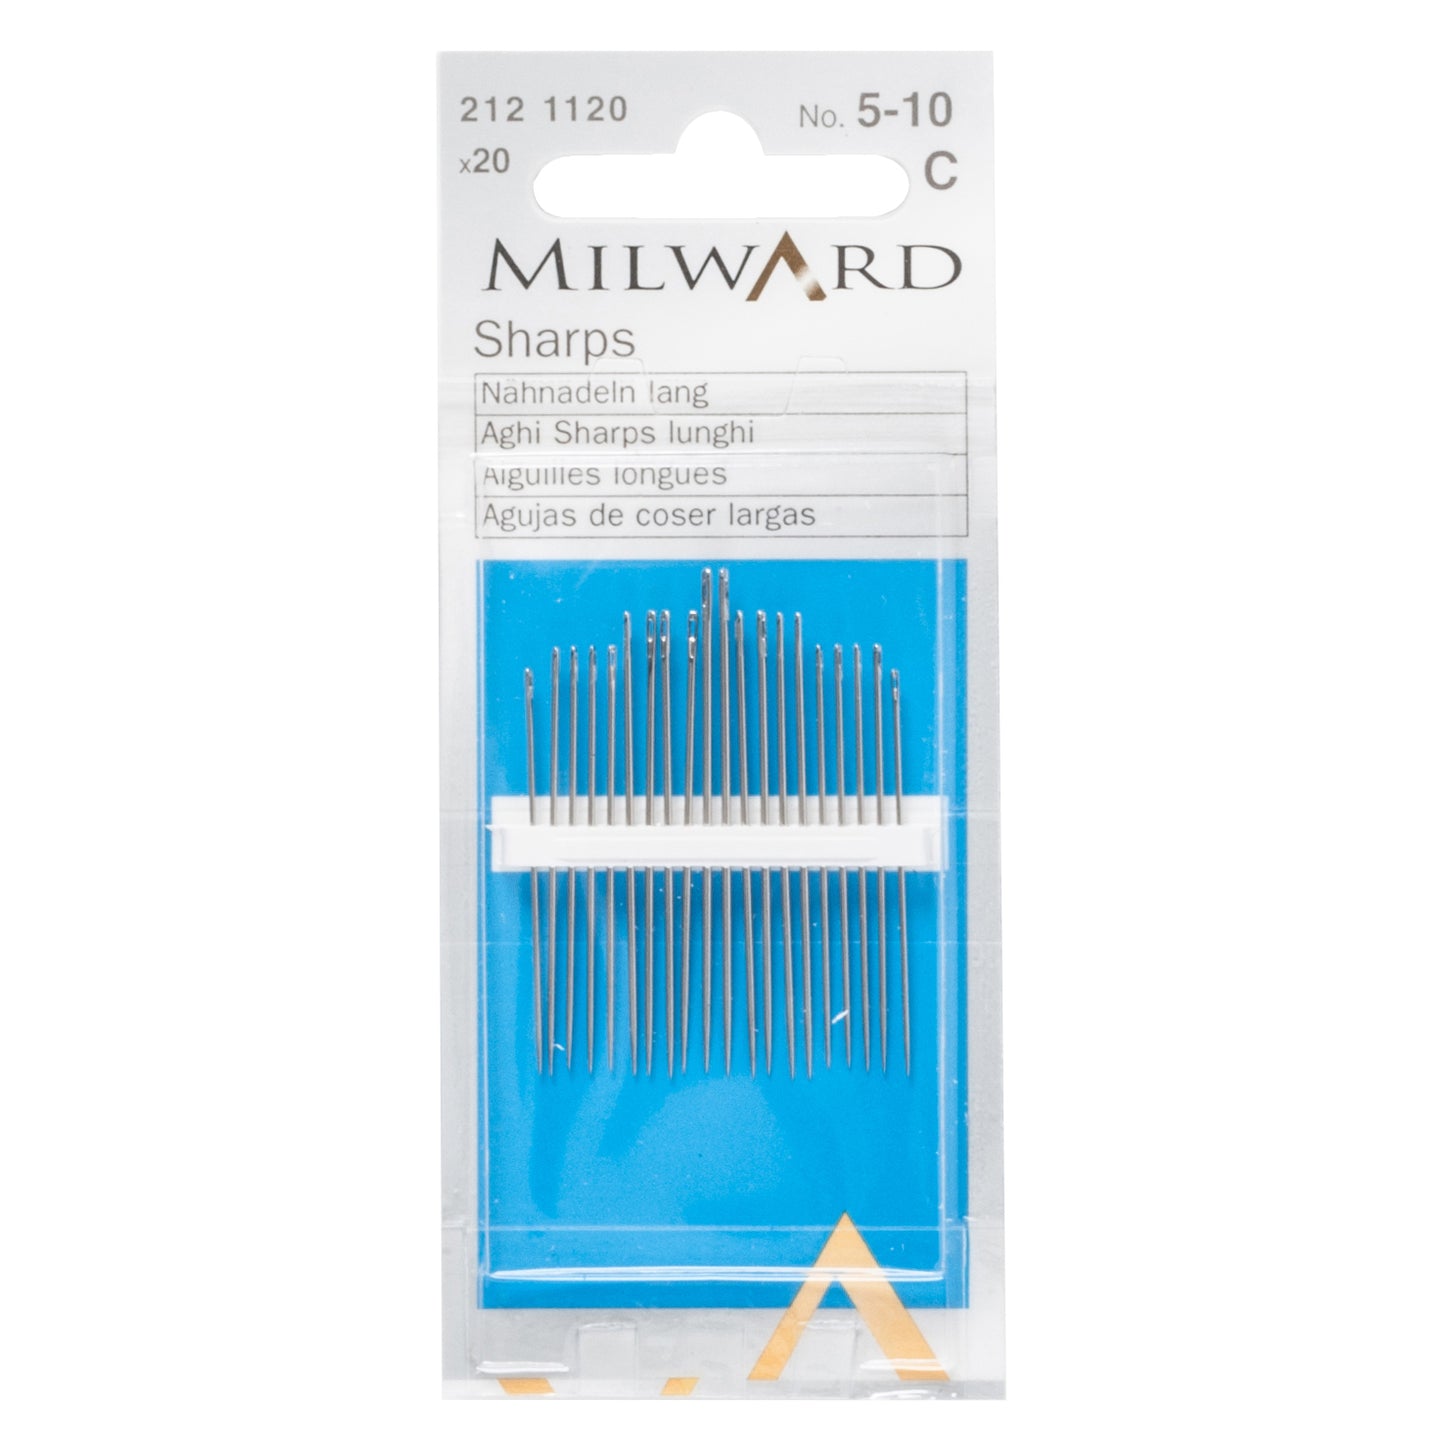 Milward Sharps (5-10) Needles